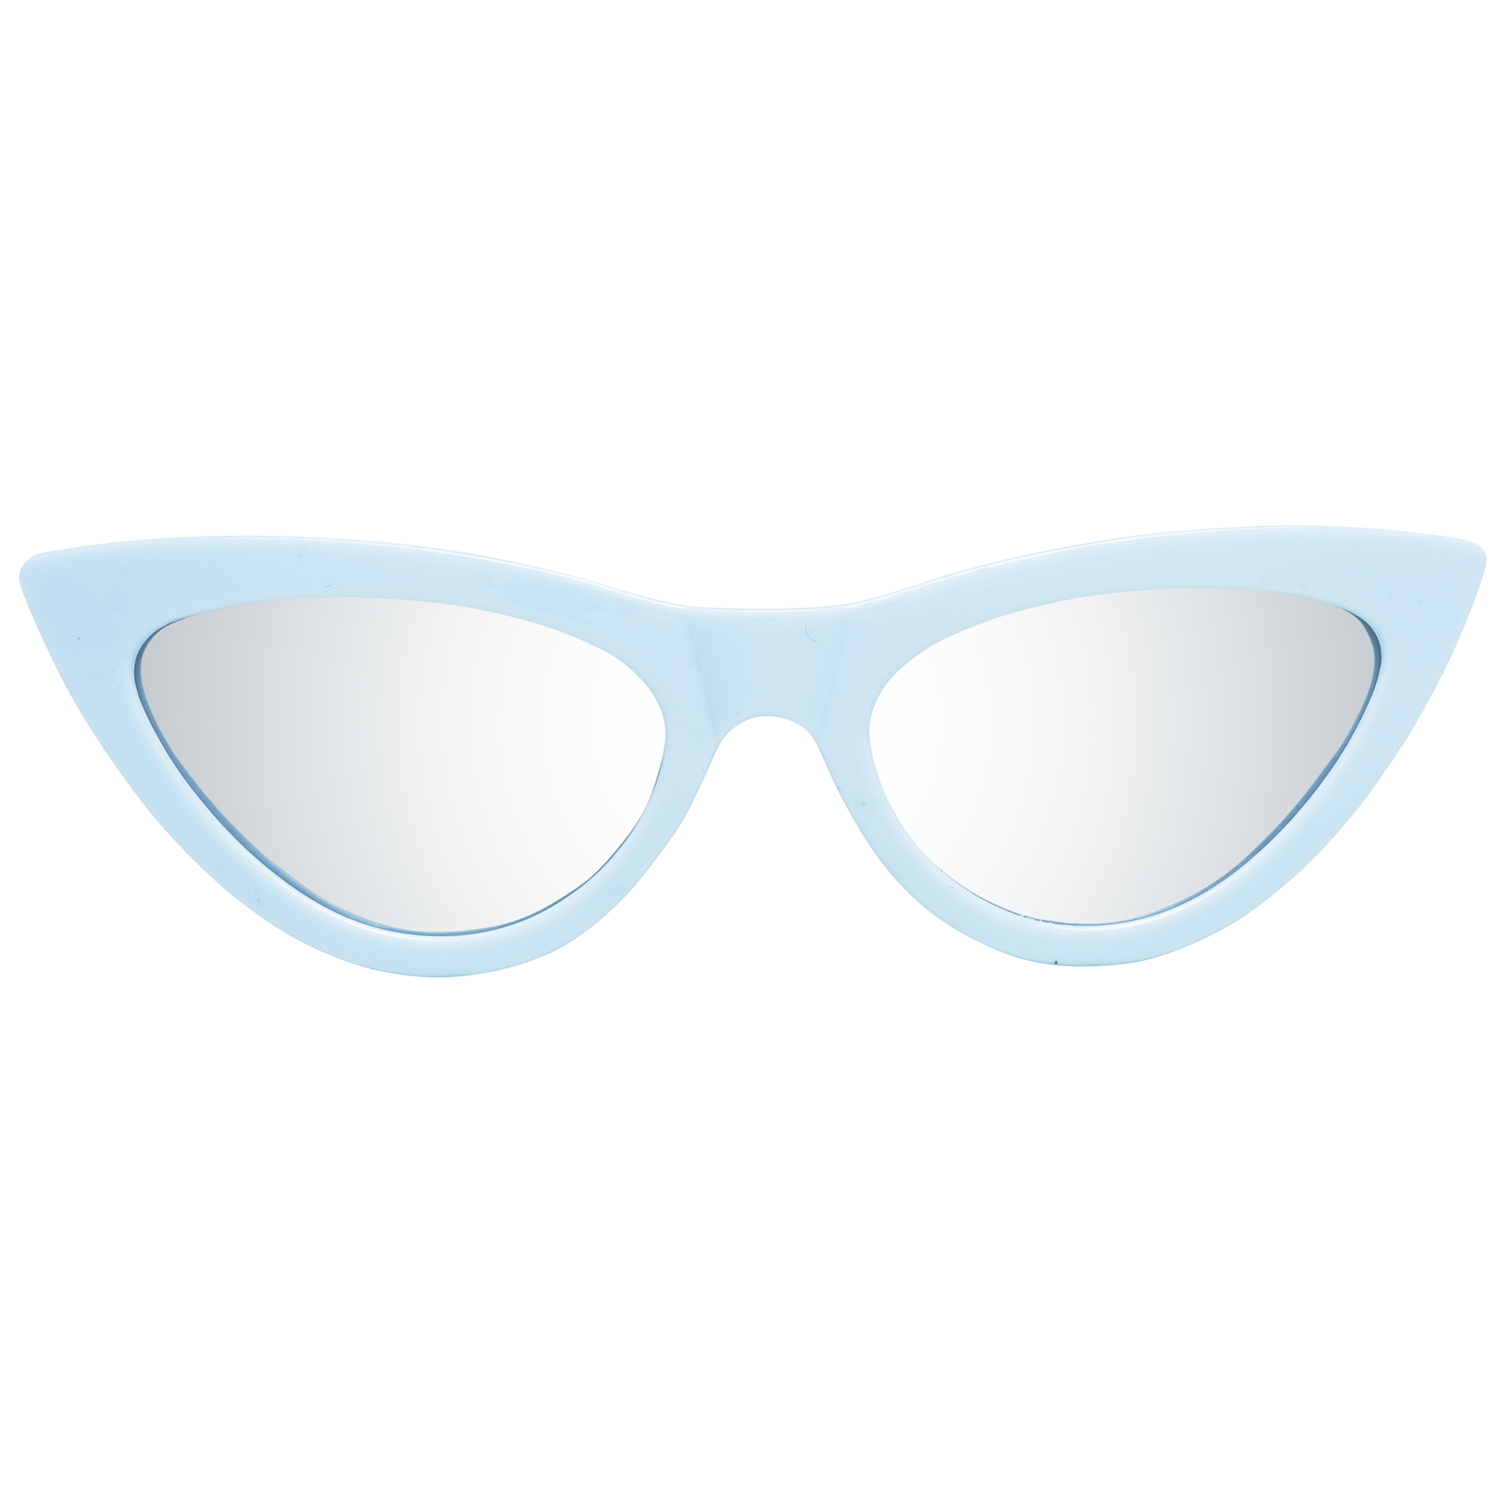 Millner Sunglasses Millner Sunglasses 0020804 Portobello Eyeglasses Eyewear UK USA Australia 